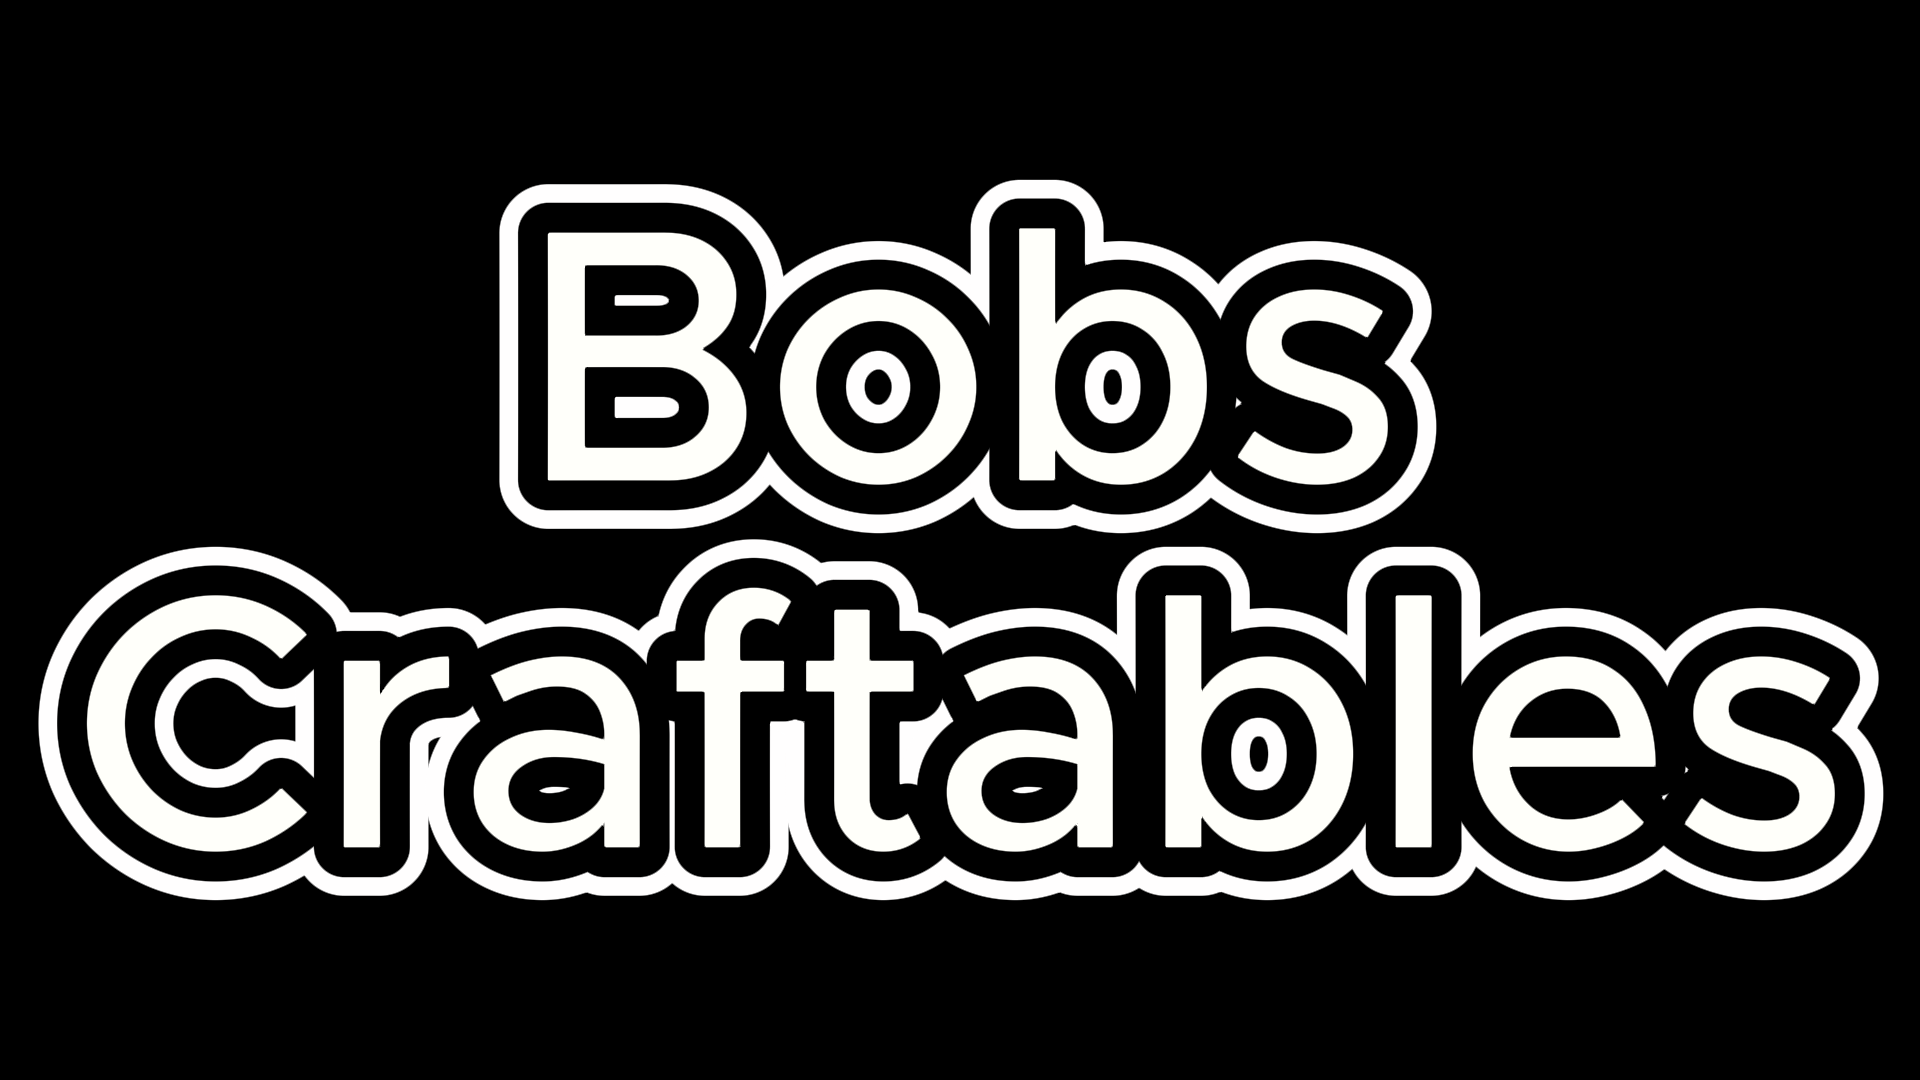 Bobs Craftables